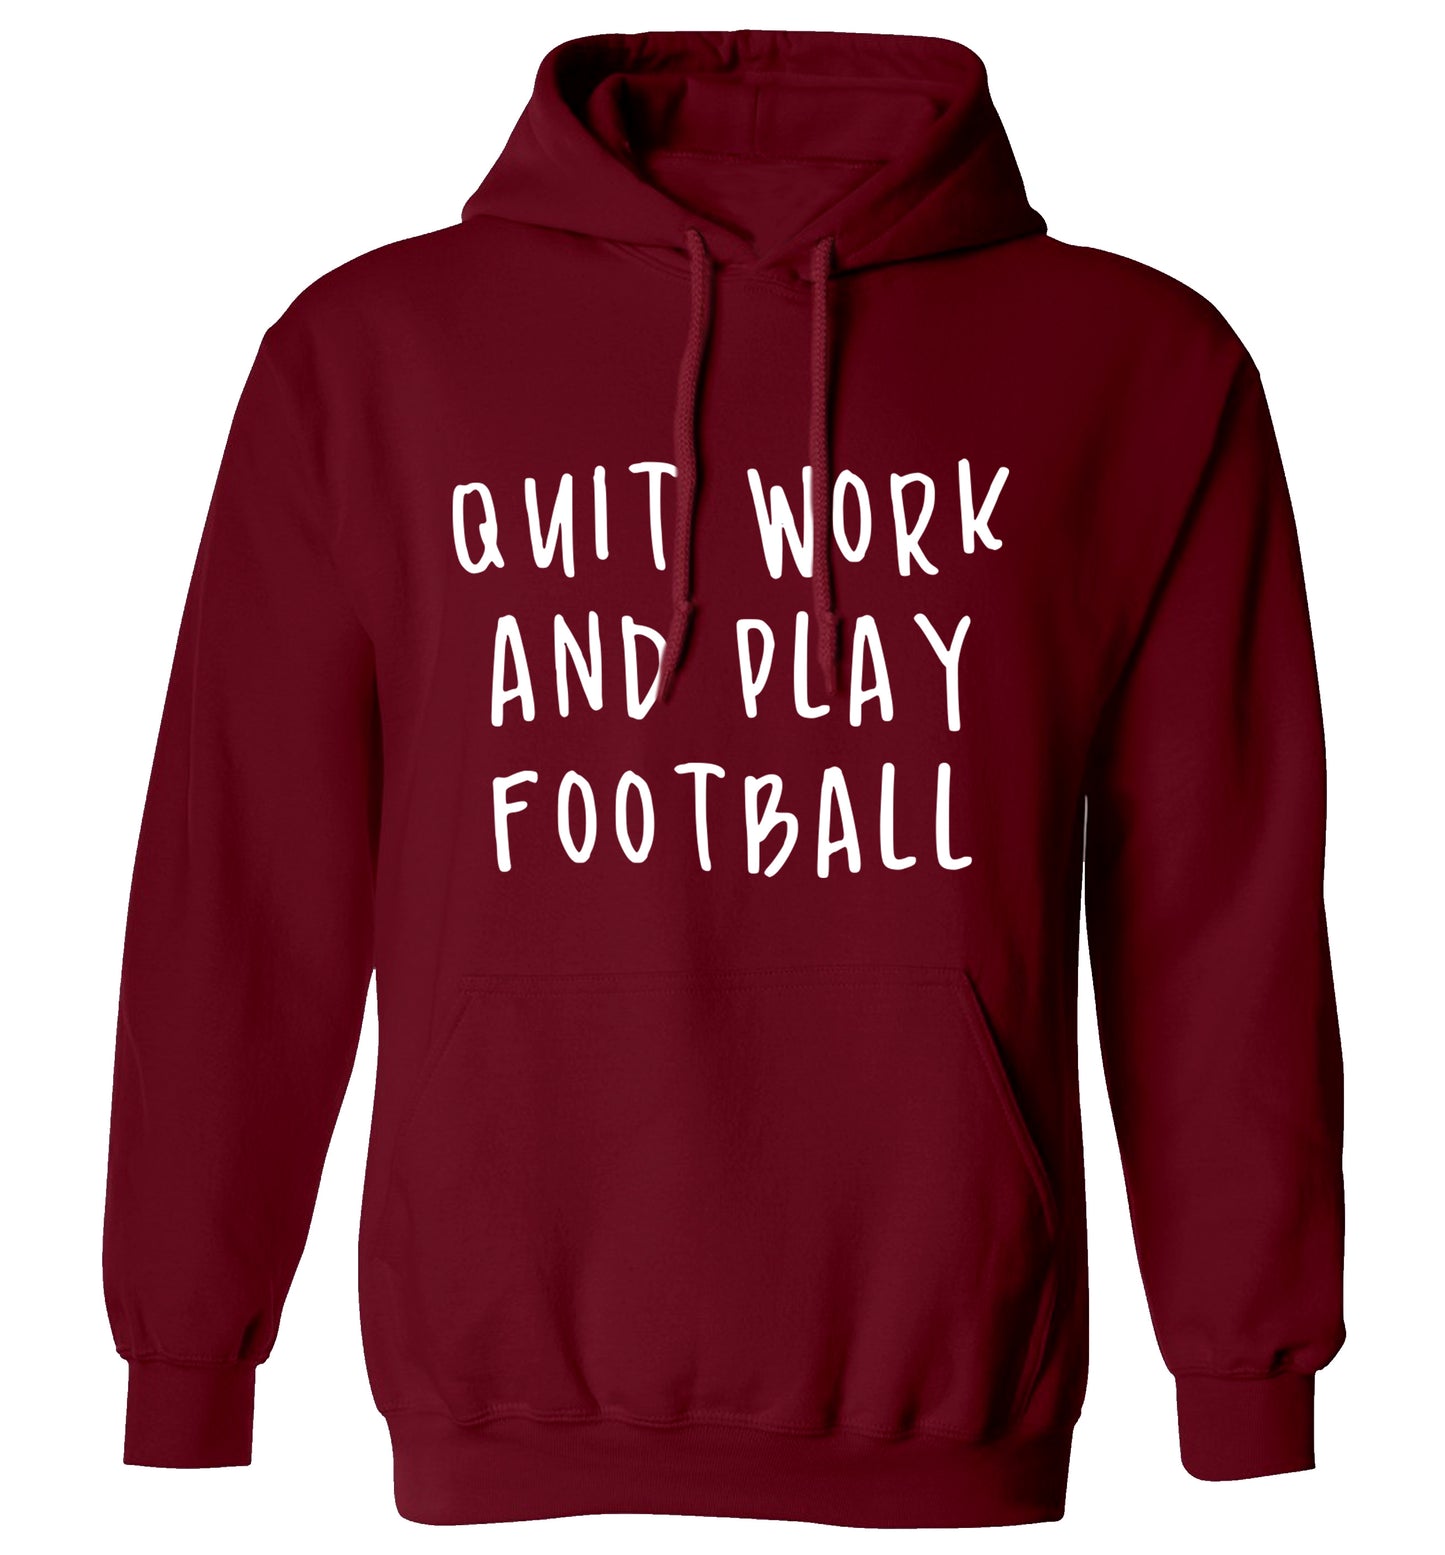 Quit work play football adults unisexmaroon hoodie 2XL